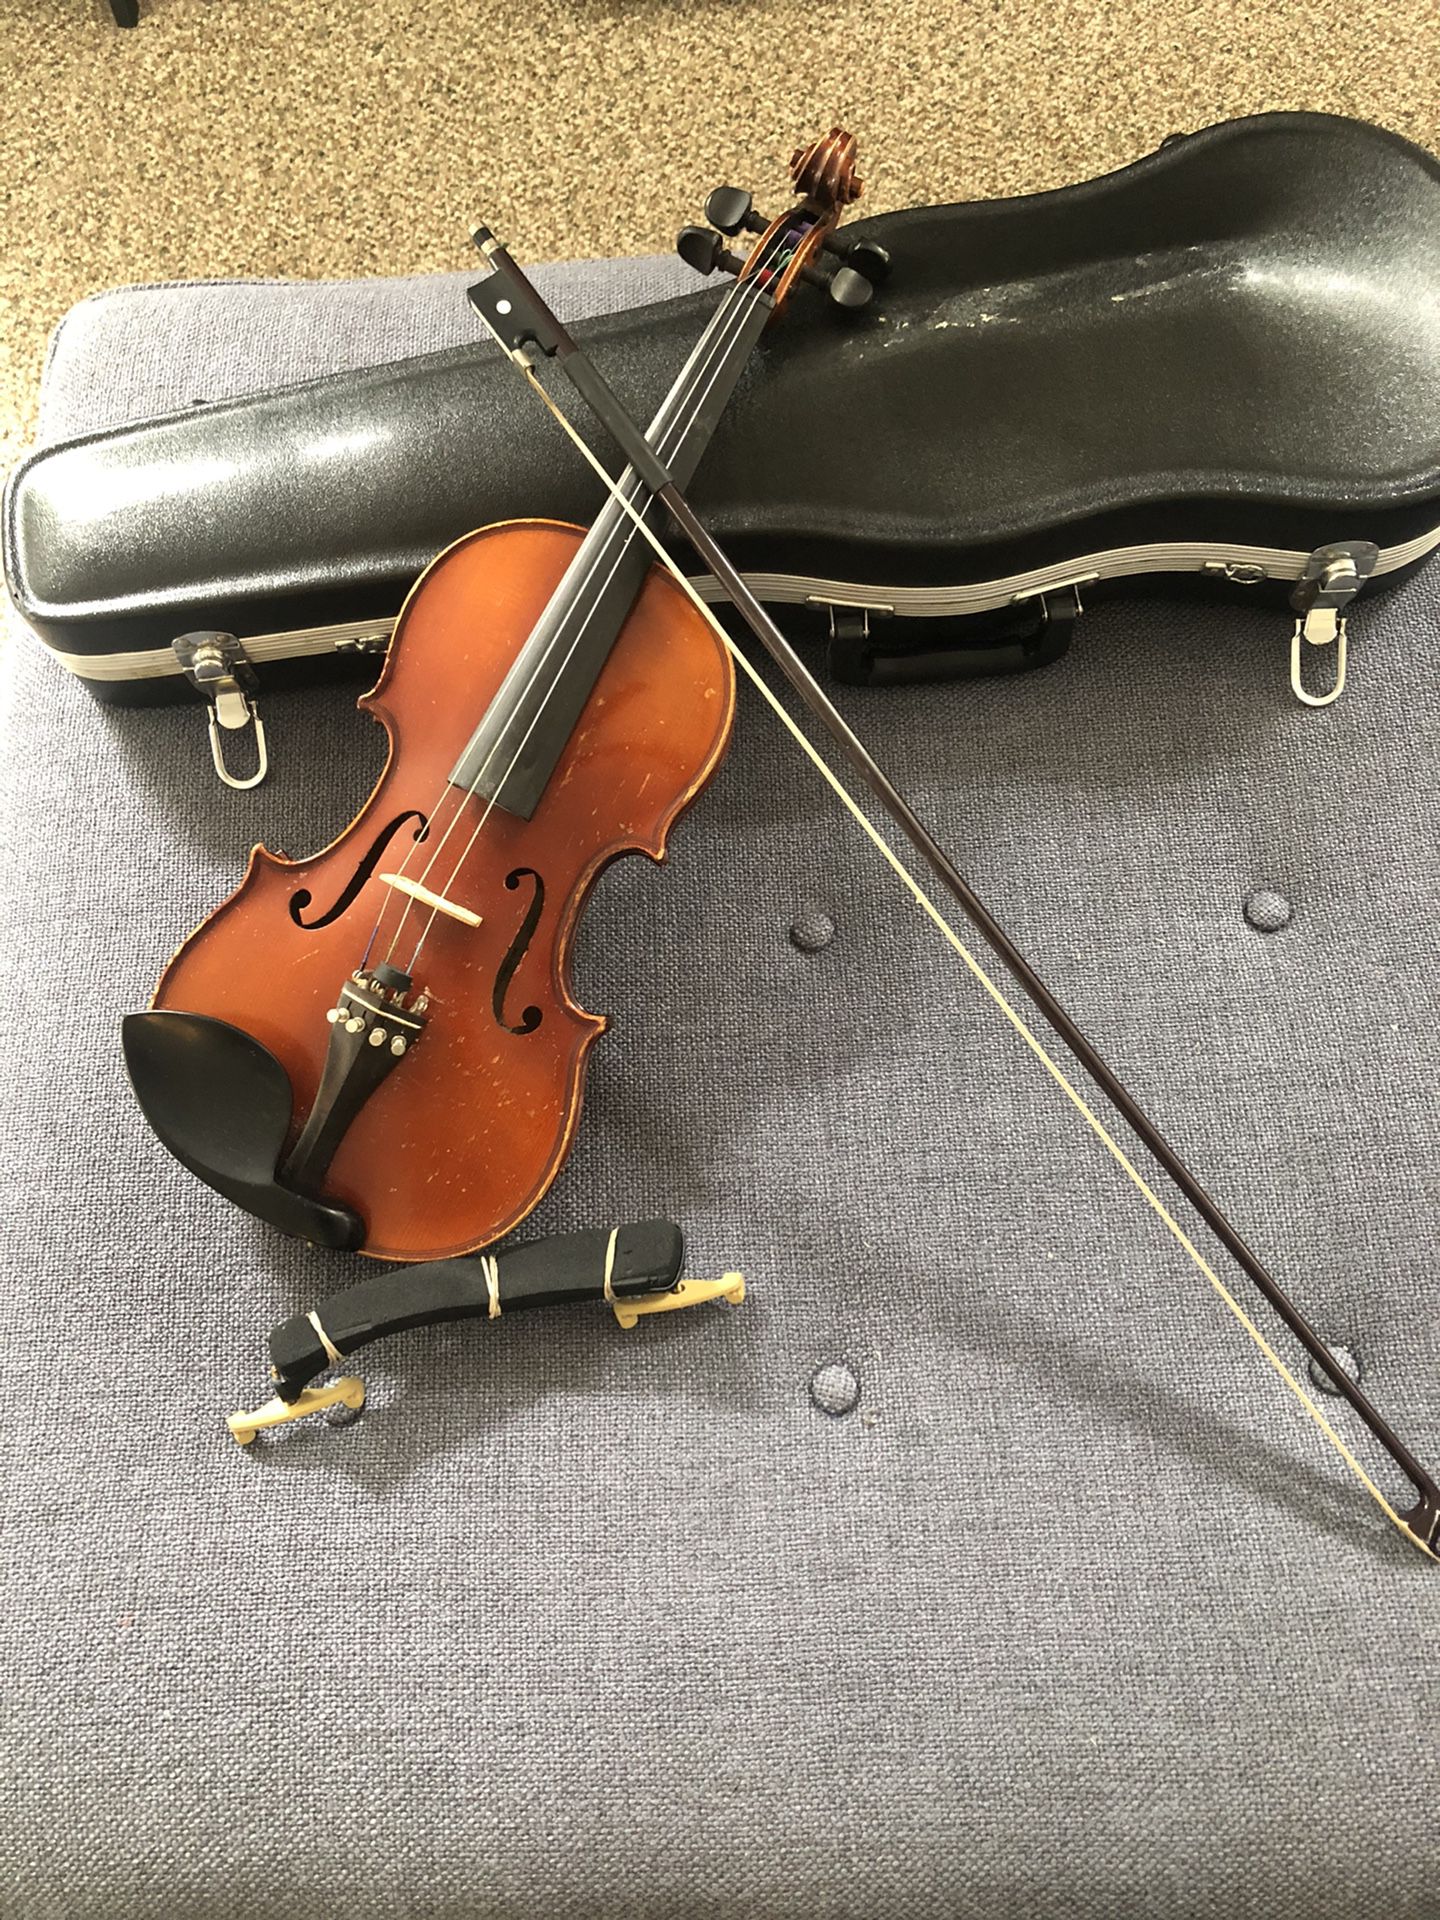 Frederick A. Strobel Violin - 4/4 R3154mA